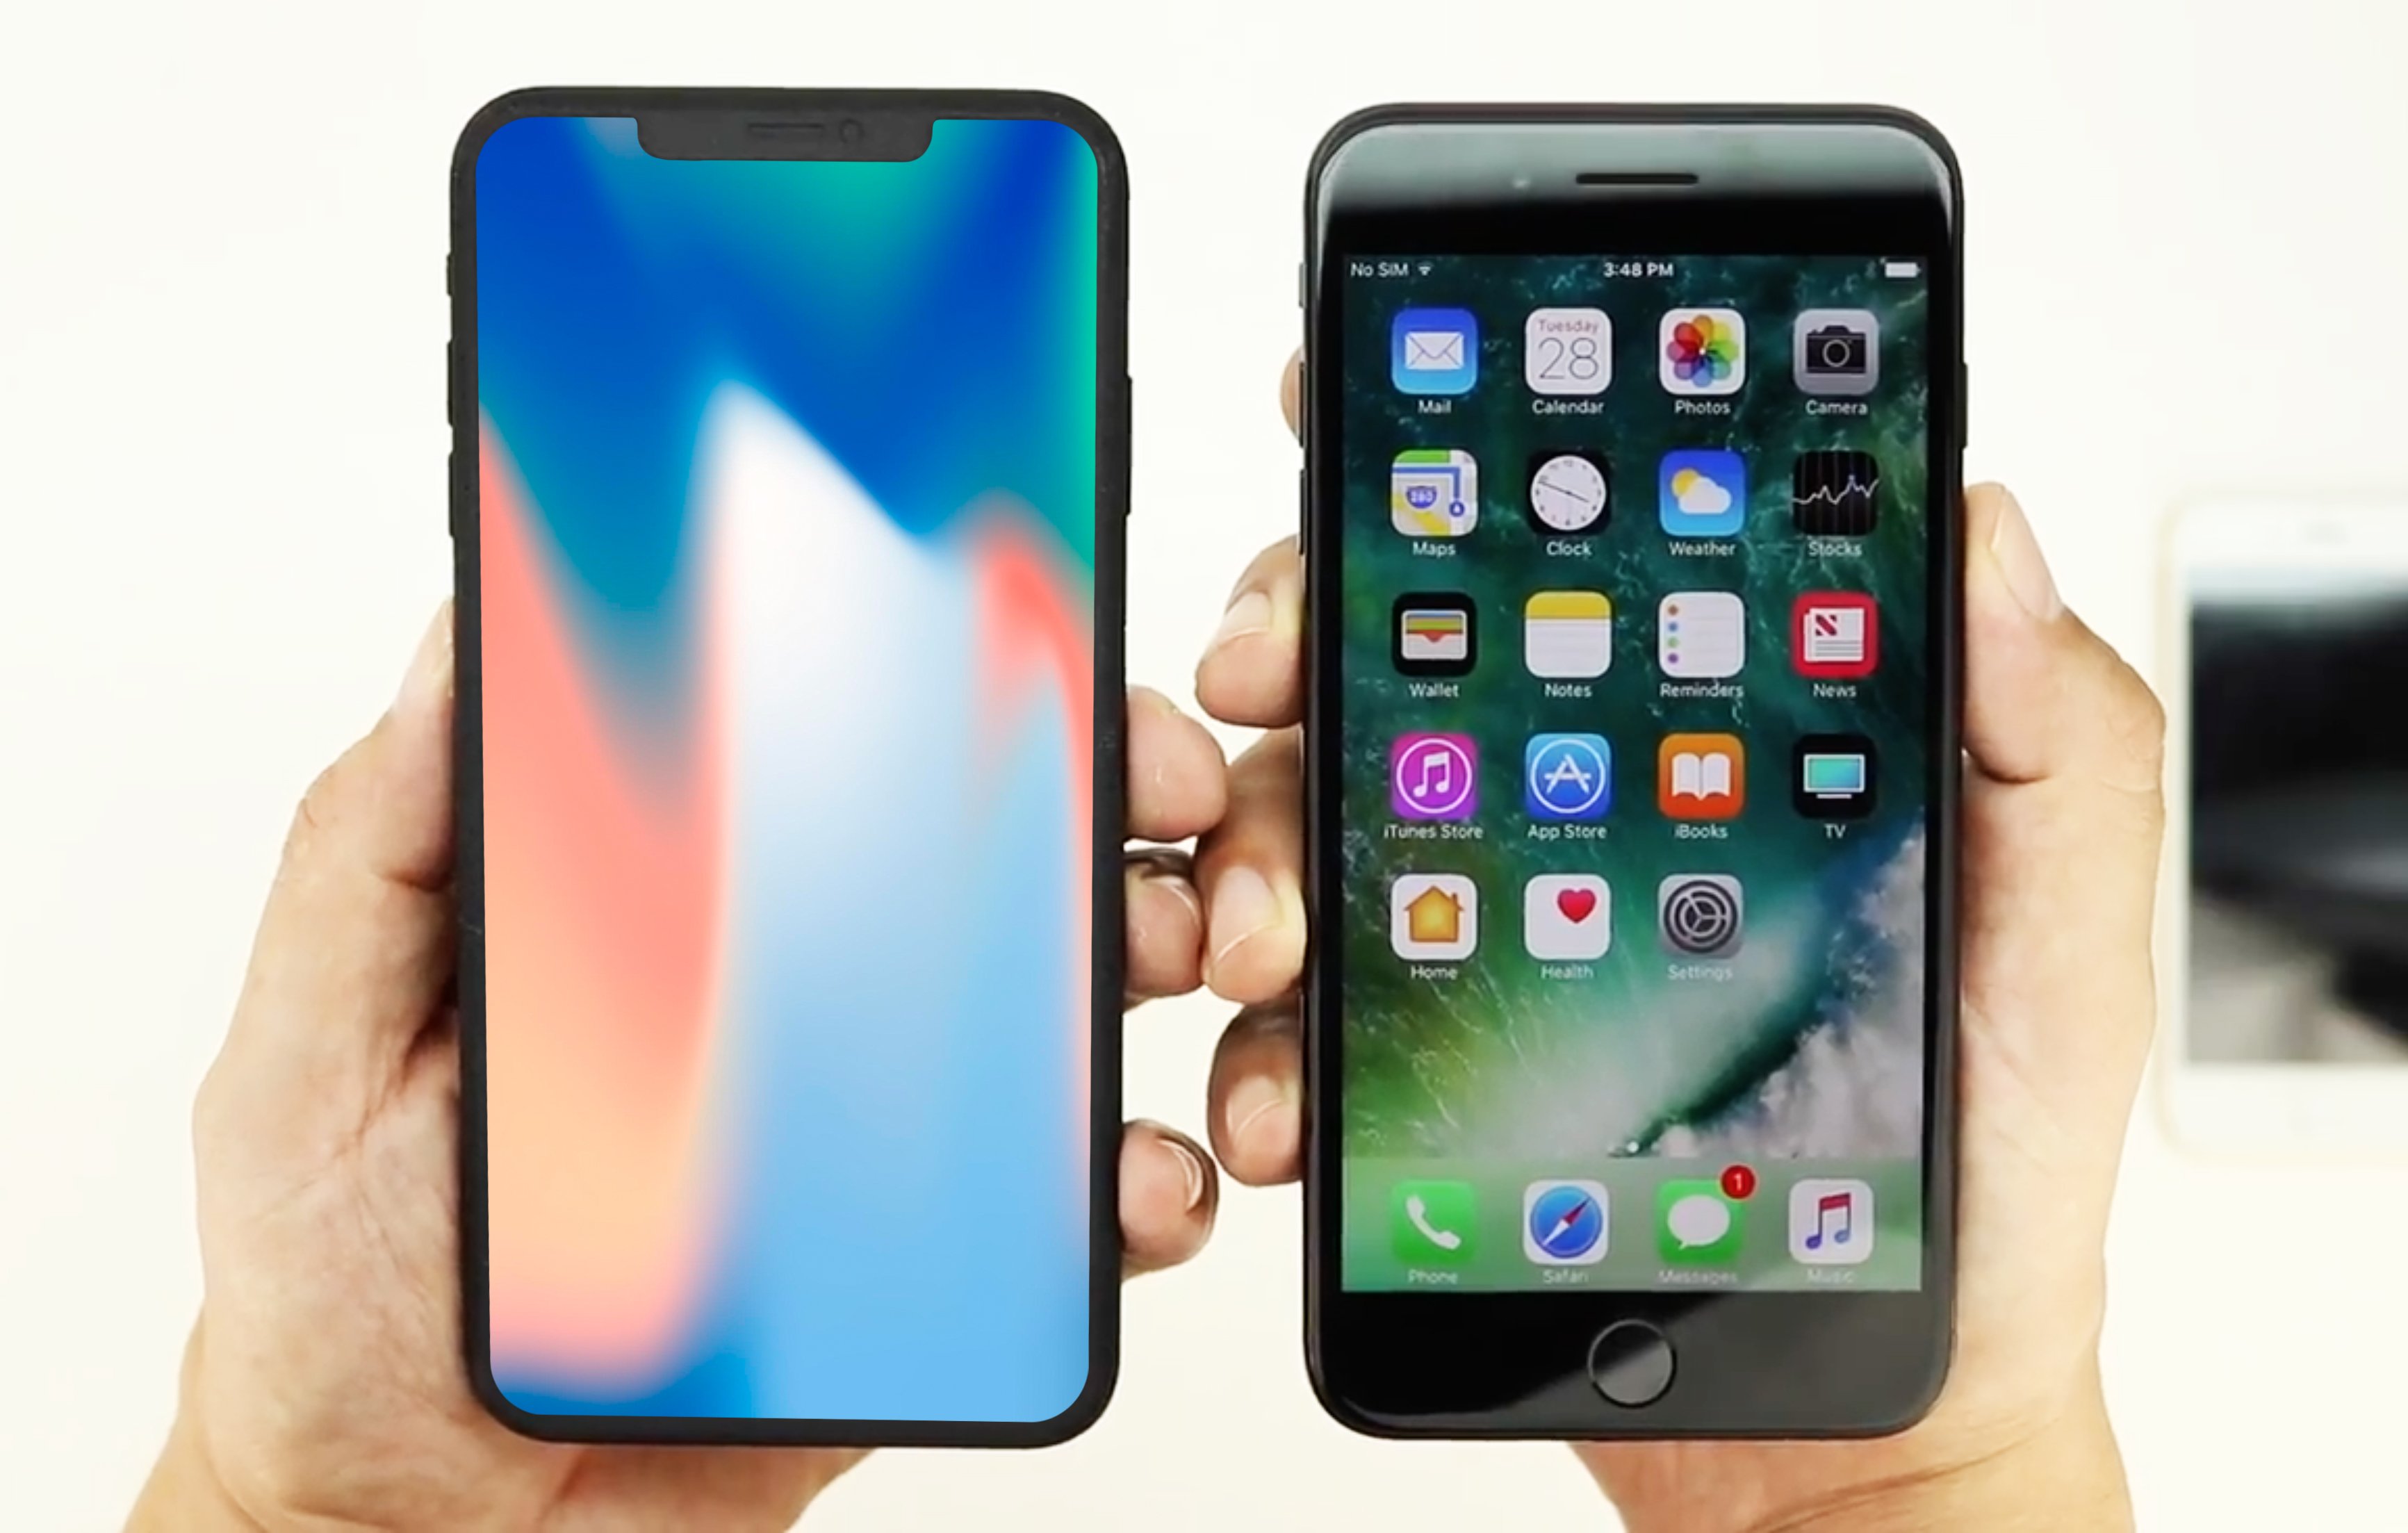 iPhone X Plus compared to iPhone 8 Plus